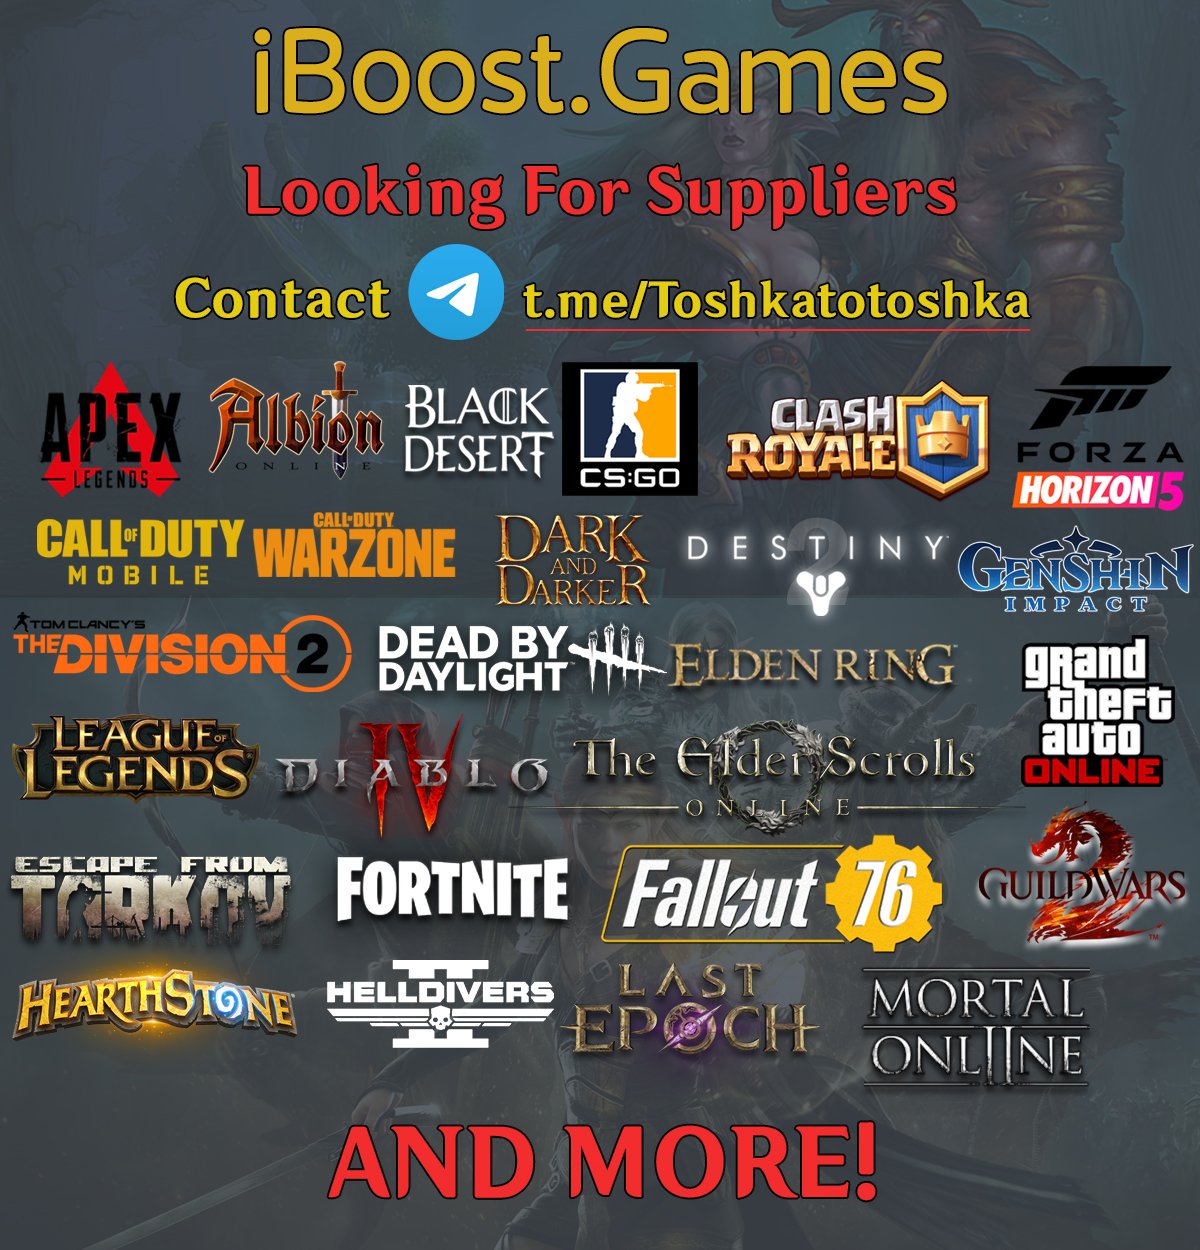 !All Games Ad.jpg